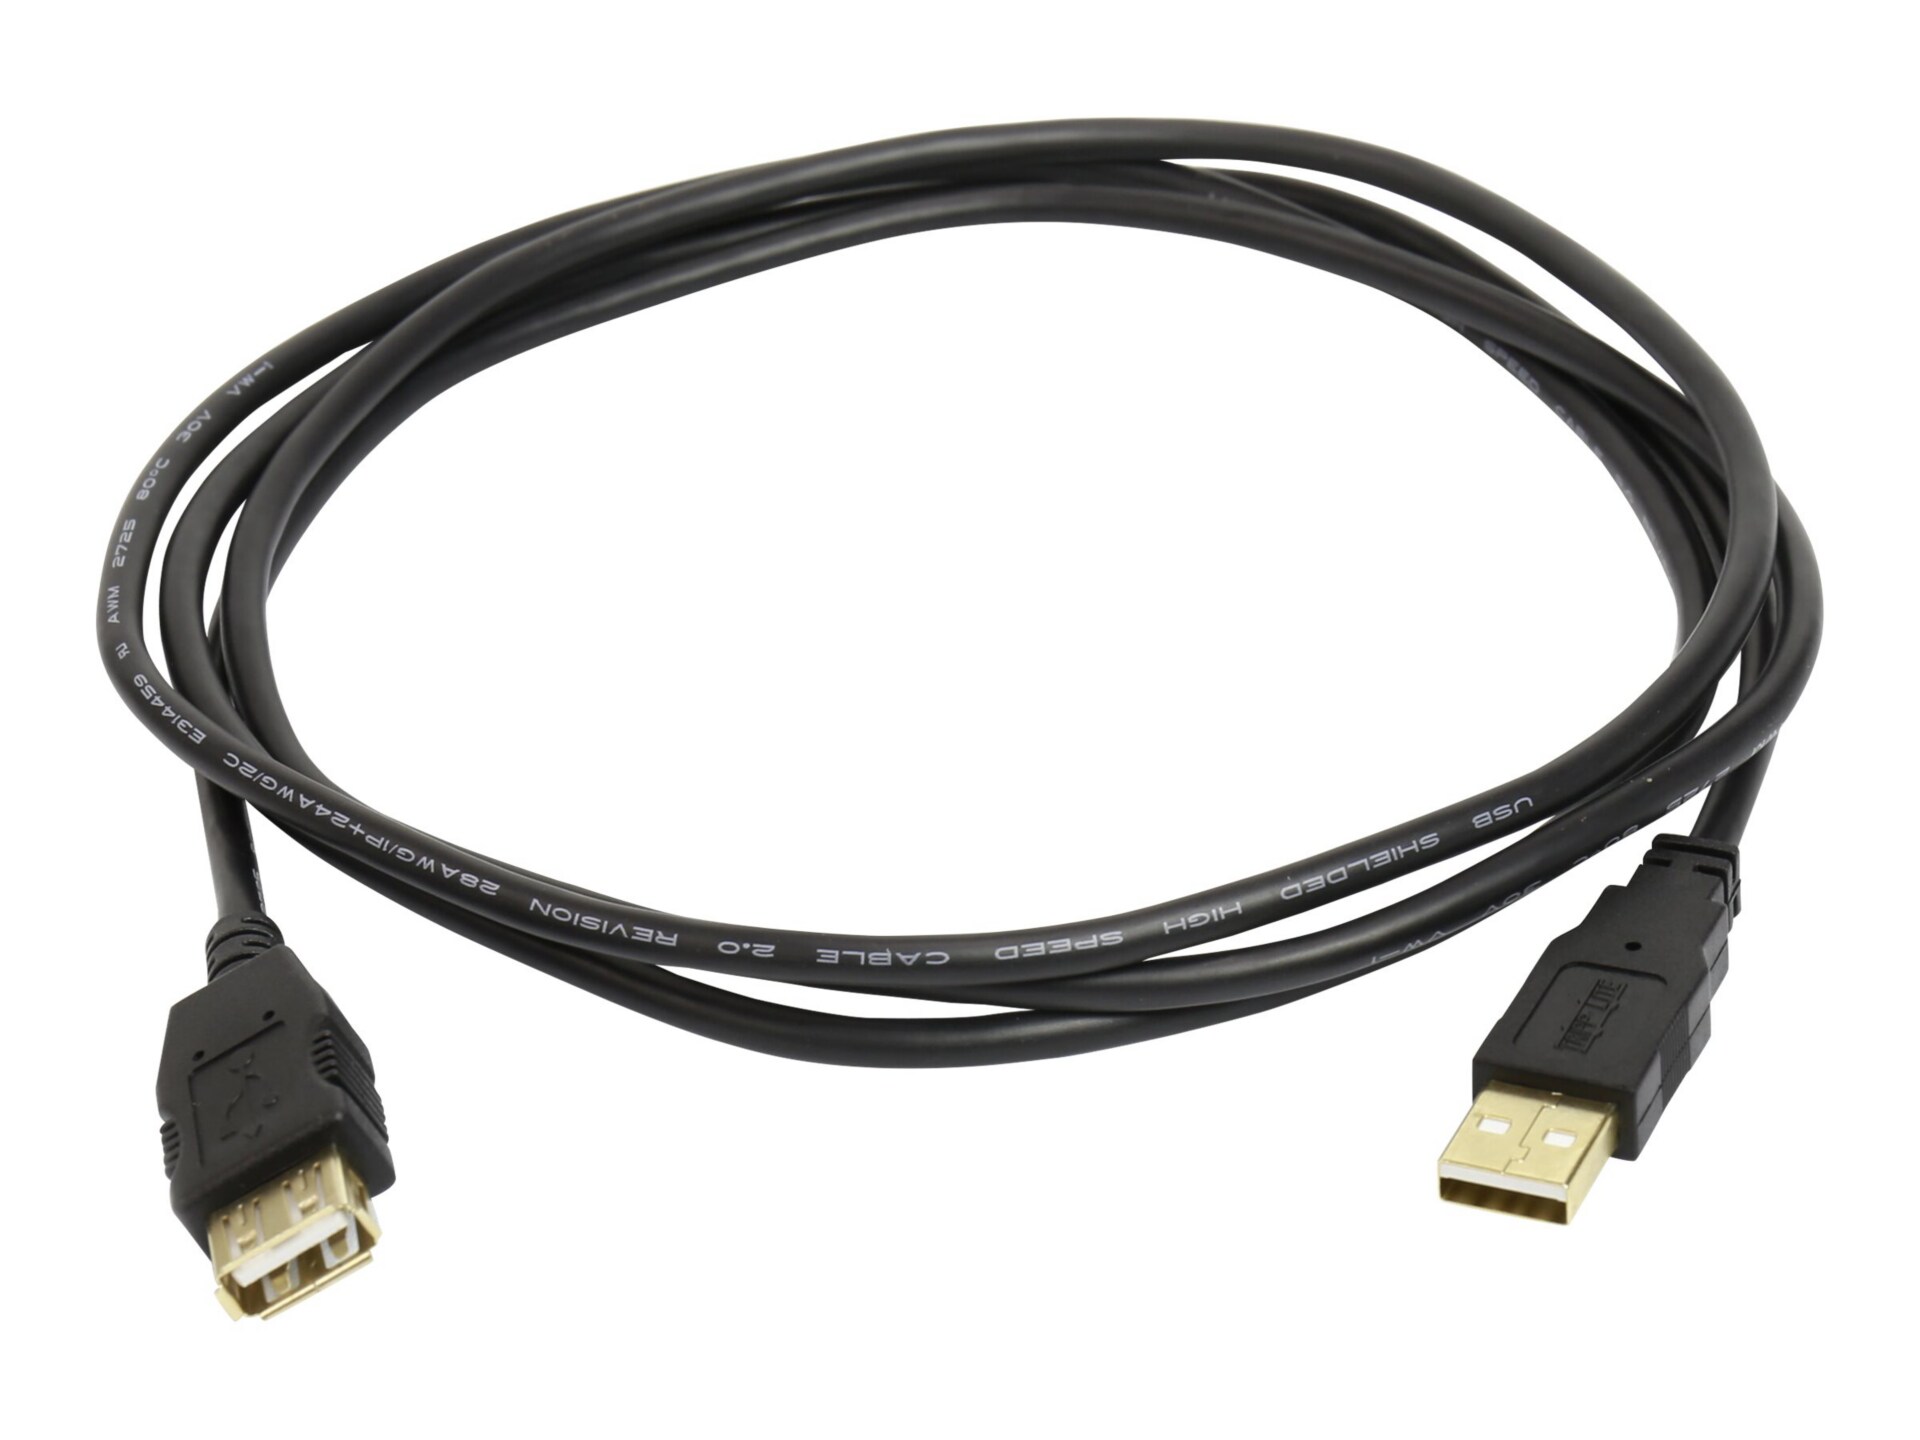 Ergotron - USB extension cable - USB to USB - 1.8 m